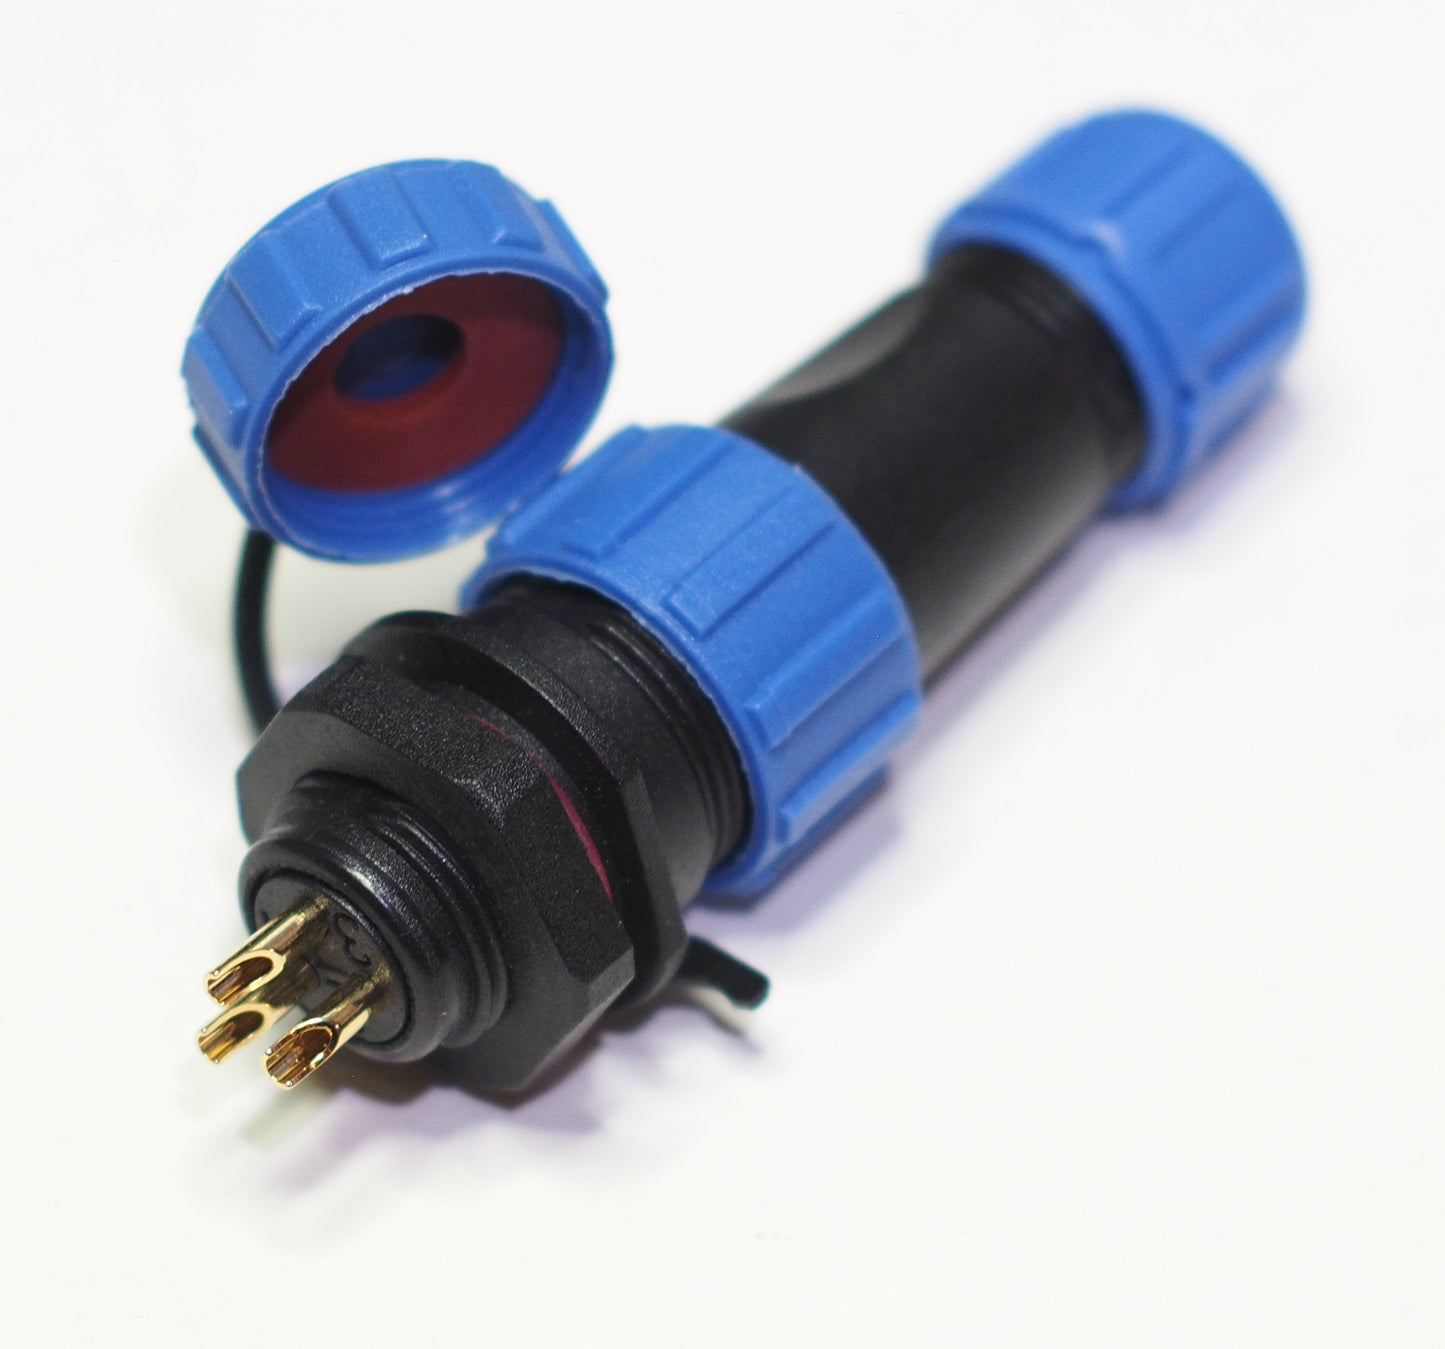 SP13 connector, 3-pin, female plug